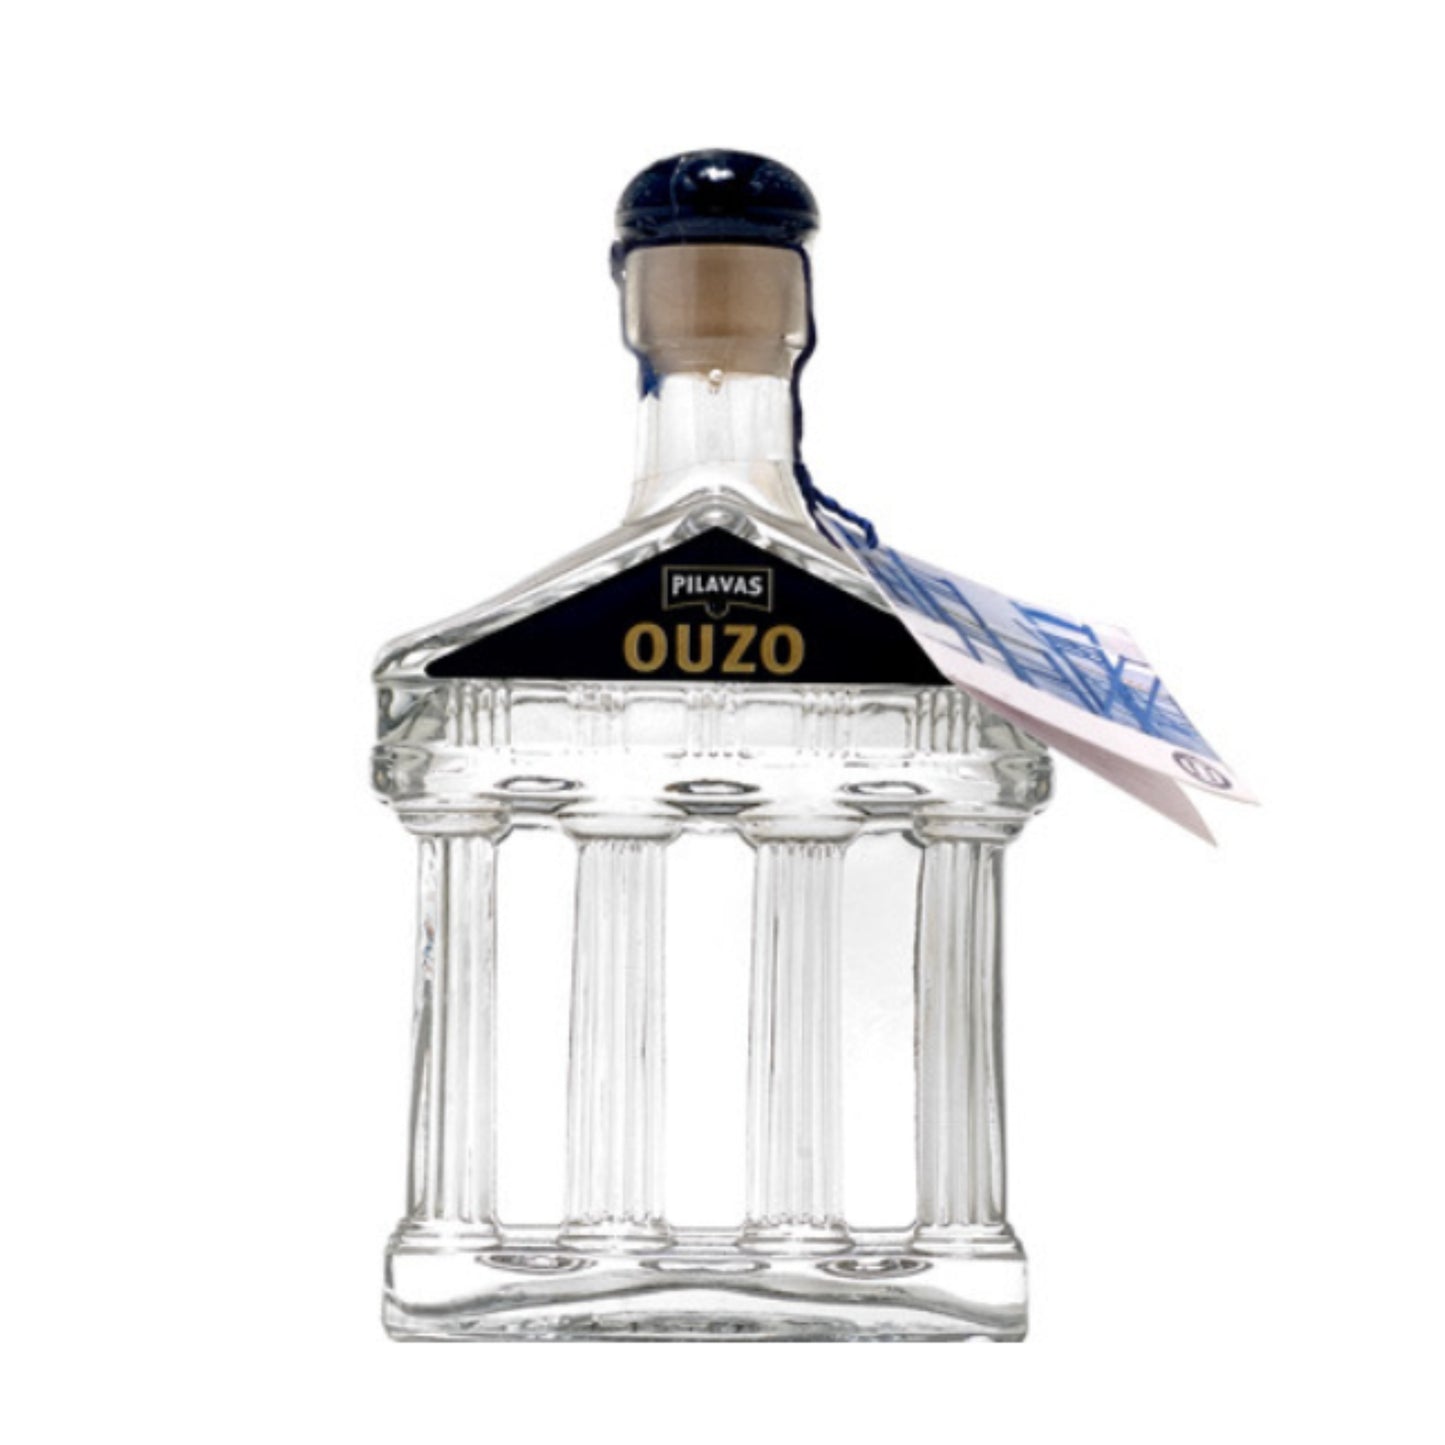 Ouzo Pilavas limited edition - 200ml